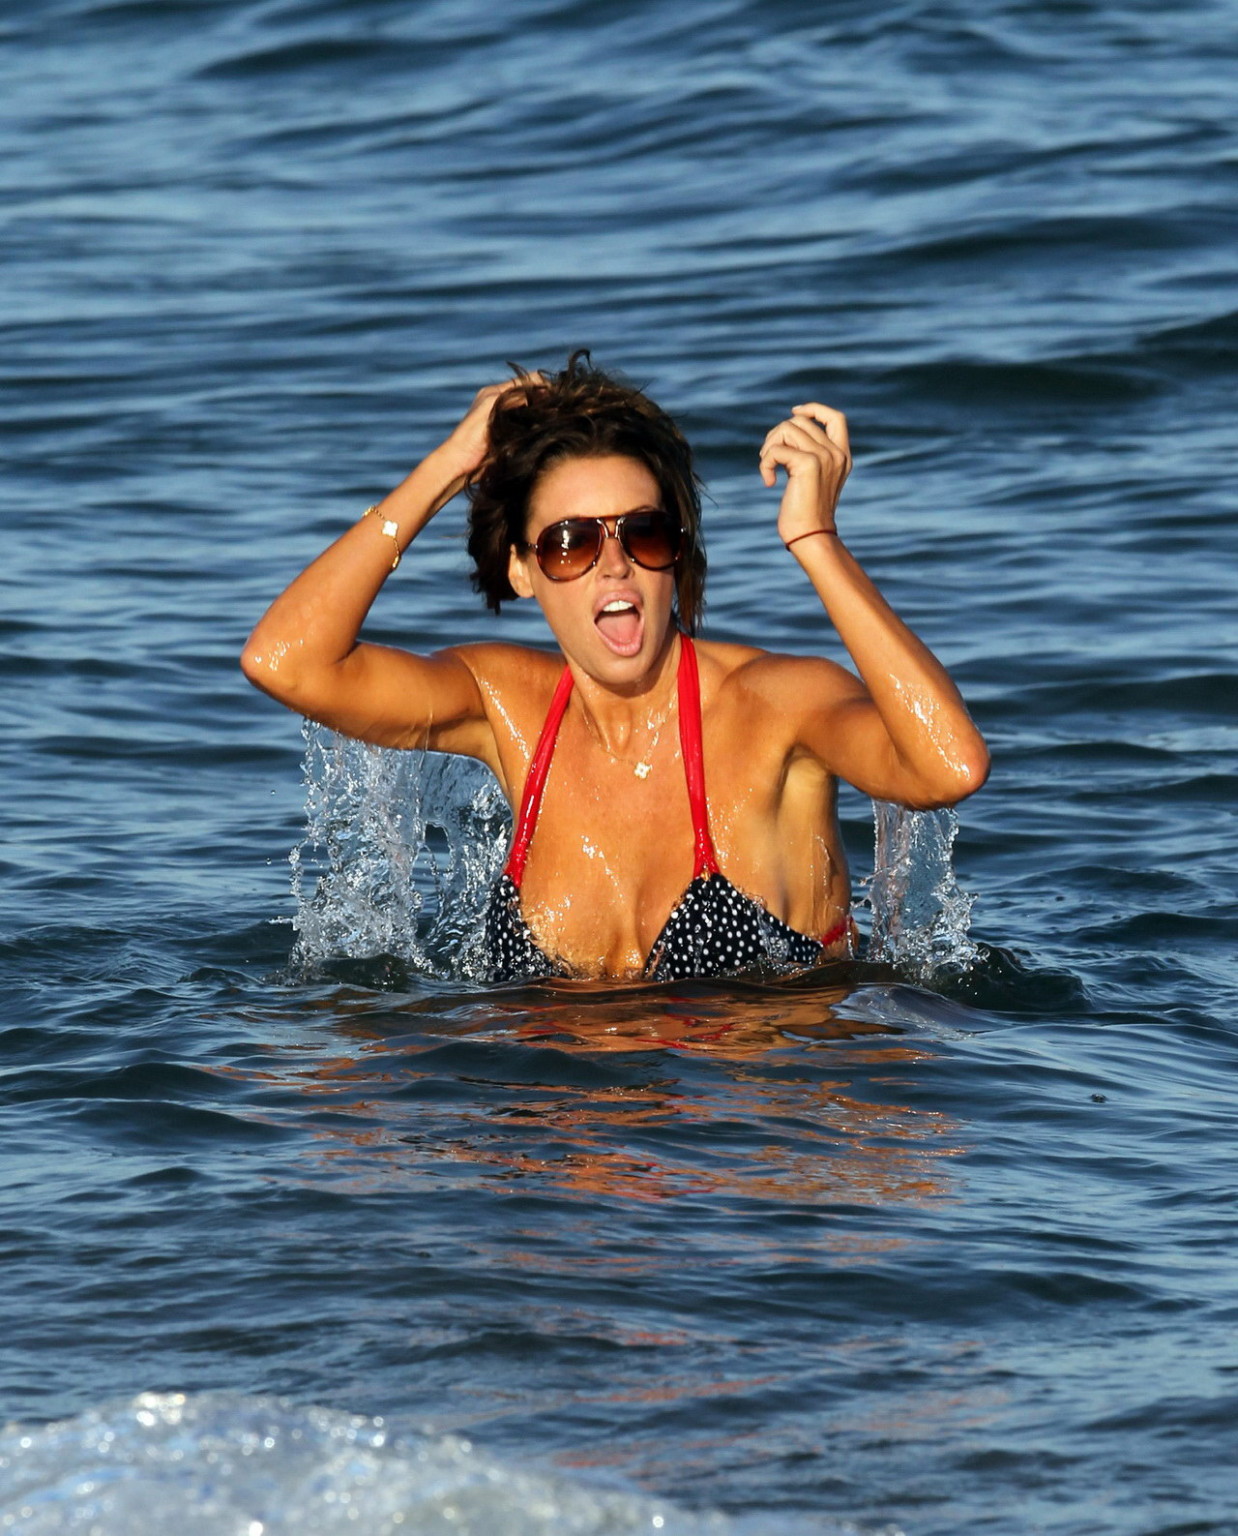 Rachel uchitel en bikini sexy jugando en la playa en los hamptons
 #75341683